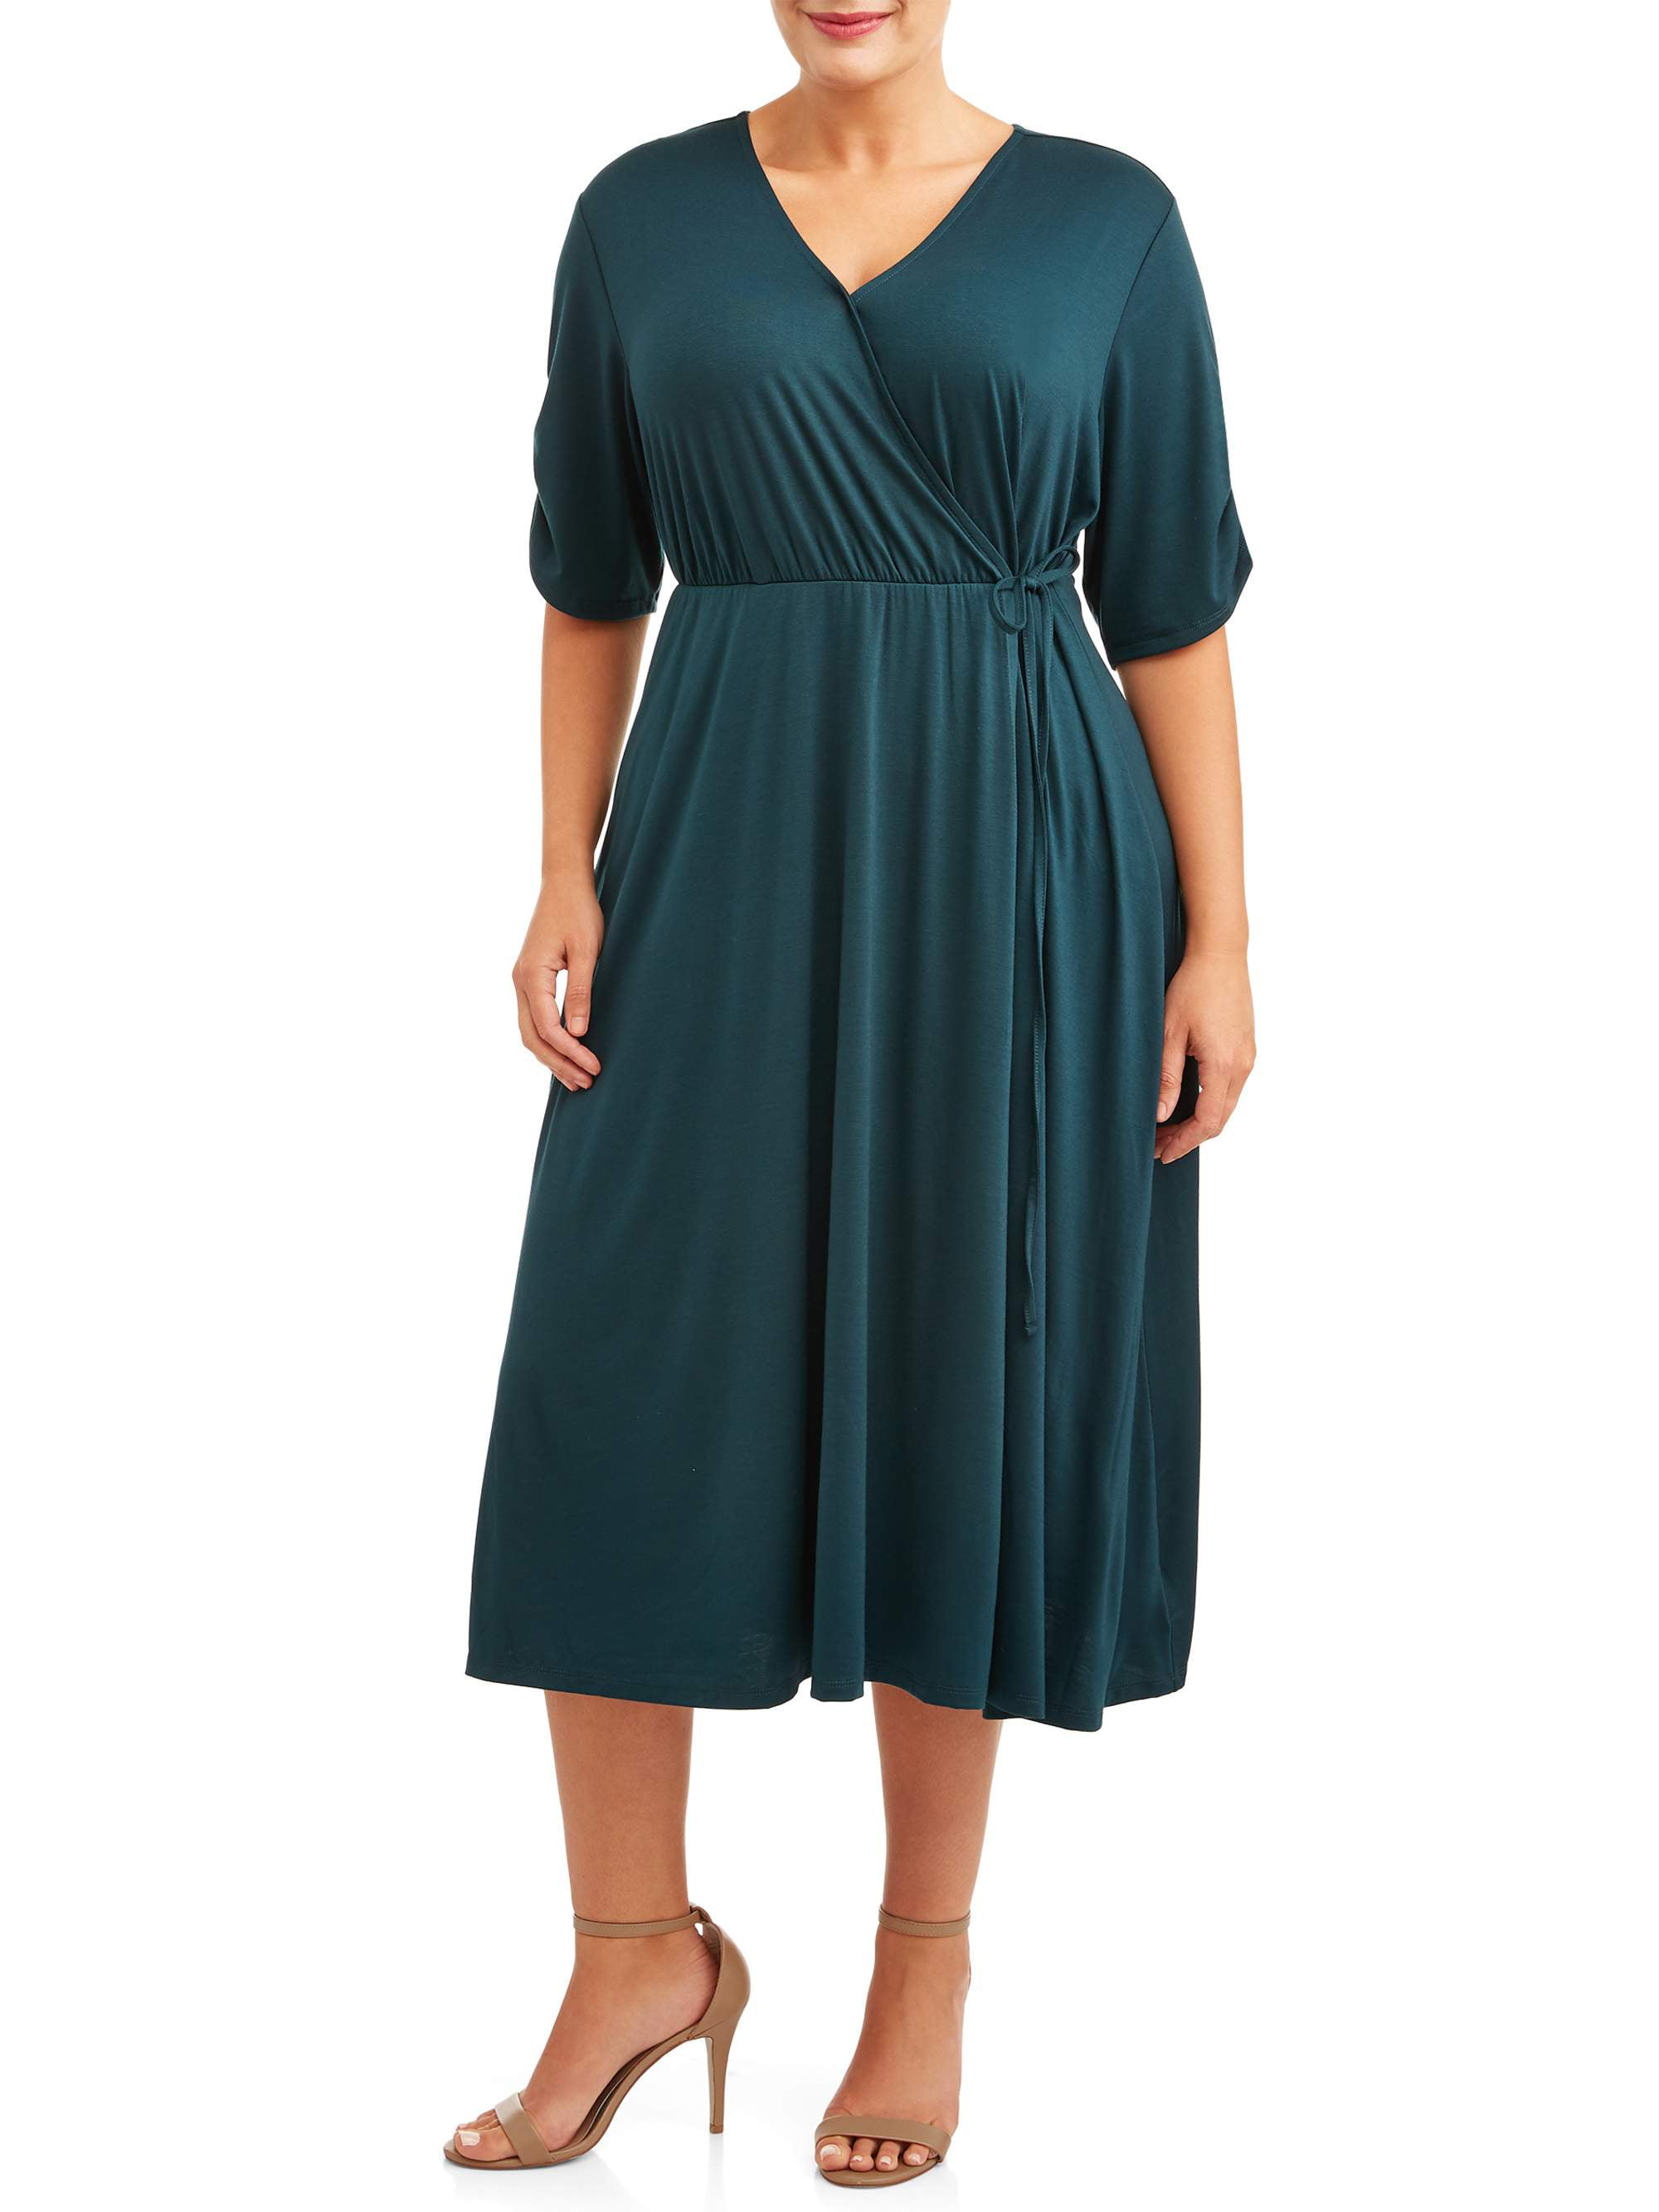 Terra \u0026 Sky Women's Plus Size Midi Faux Wrap Dress - Walmart.com